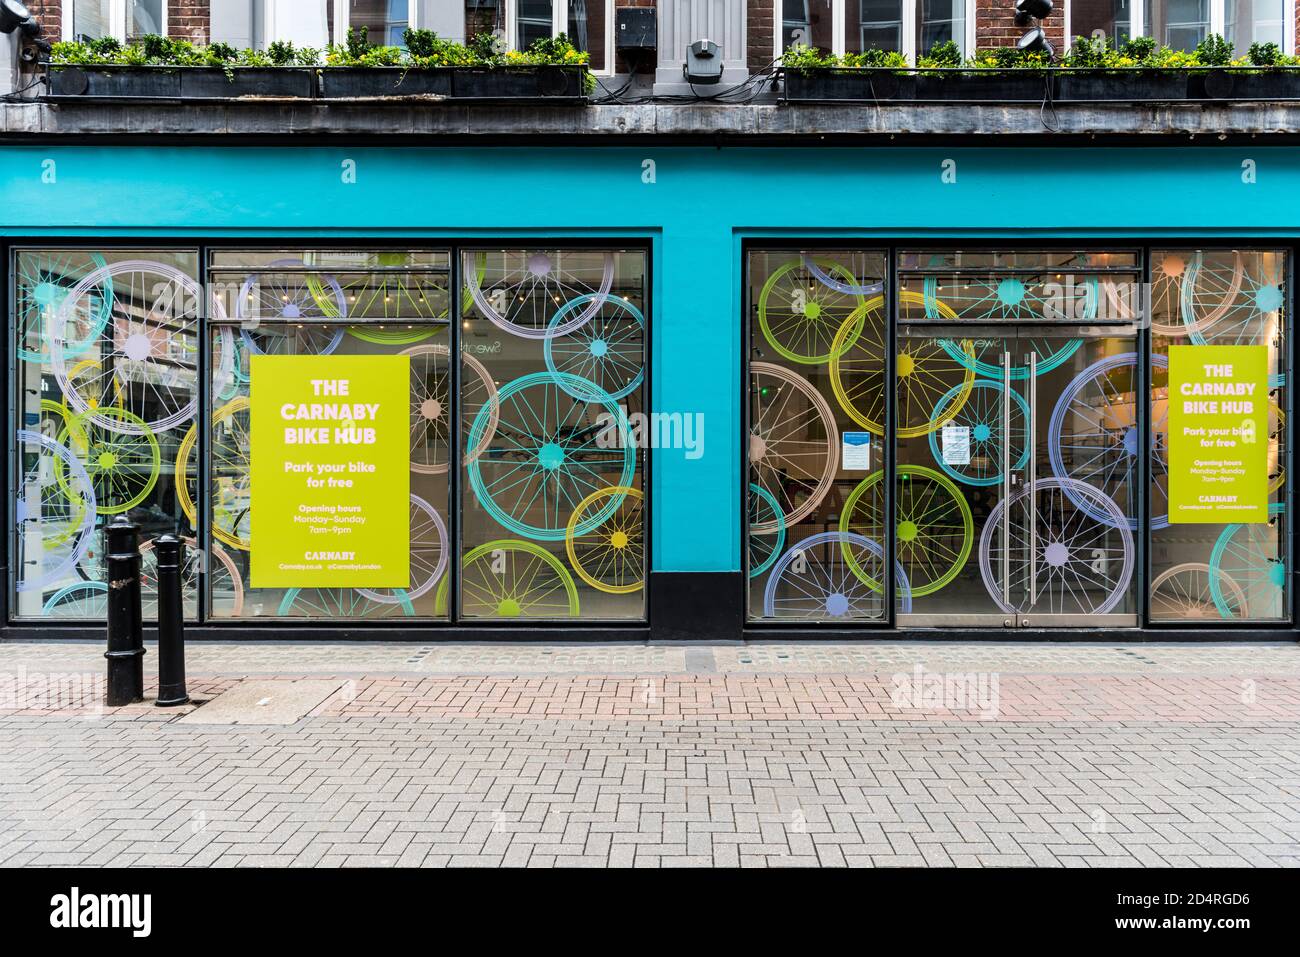 Bike hub, Carnaby street, London Stock Photo